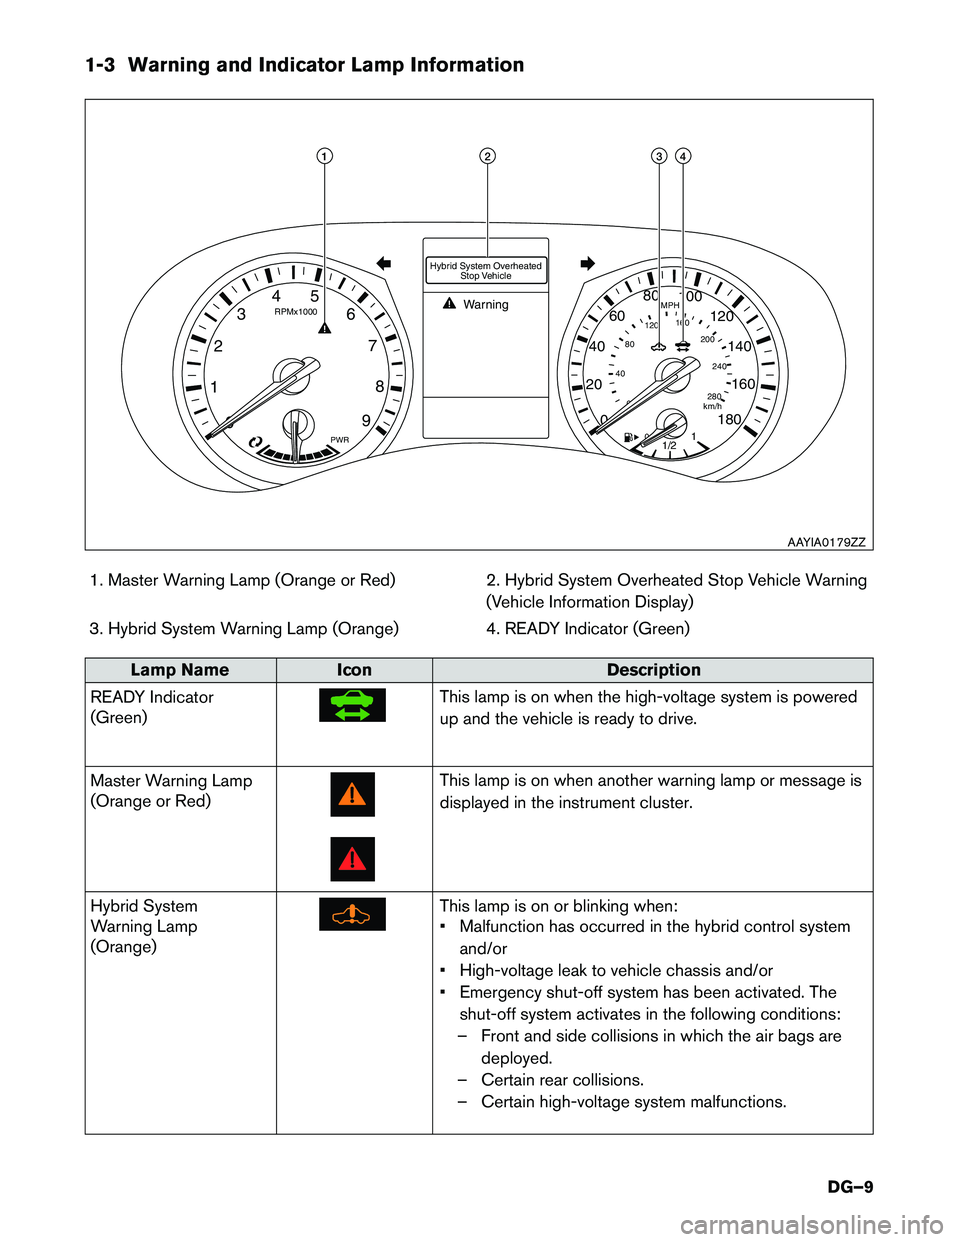 INFINITI Q50 HYBRID 2018  Dismantling Guide 1-3 Warning and Indicator Lamp Information
1. Master Warning Lamp (Orange or Red) 2. Hybrid System Overheated Stop Vehicle Warning
(Vehicle Information Display)
3. Hybrid System Warning Lamp (Orange) 